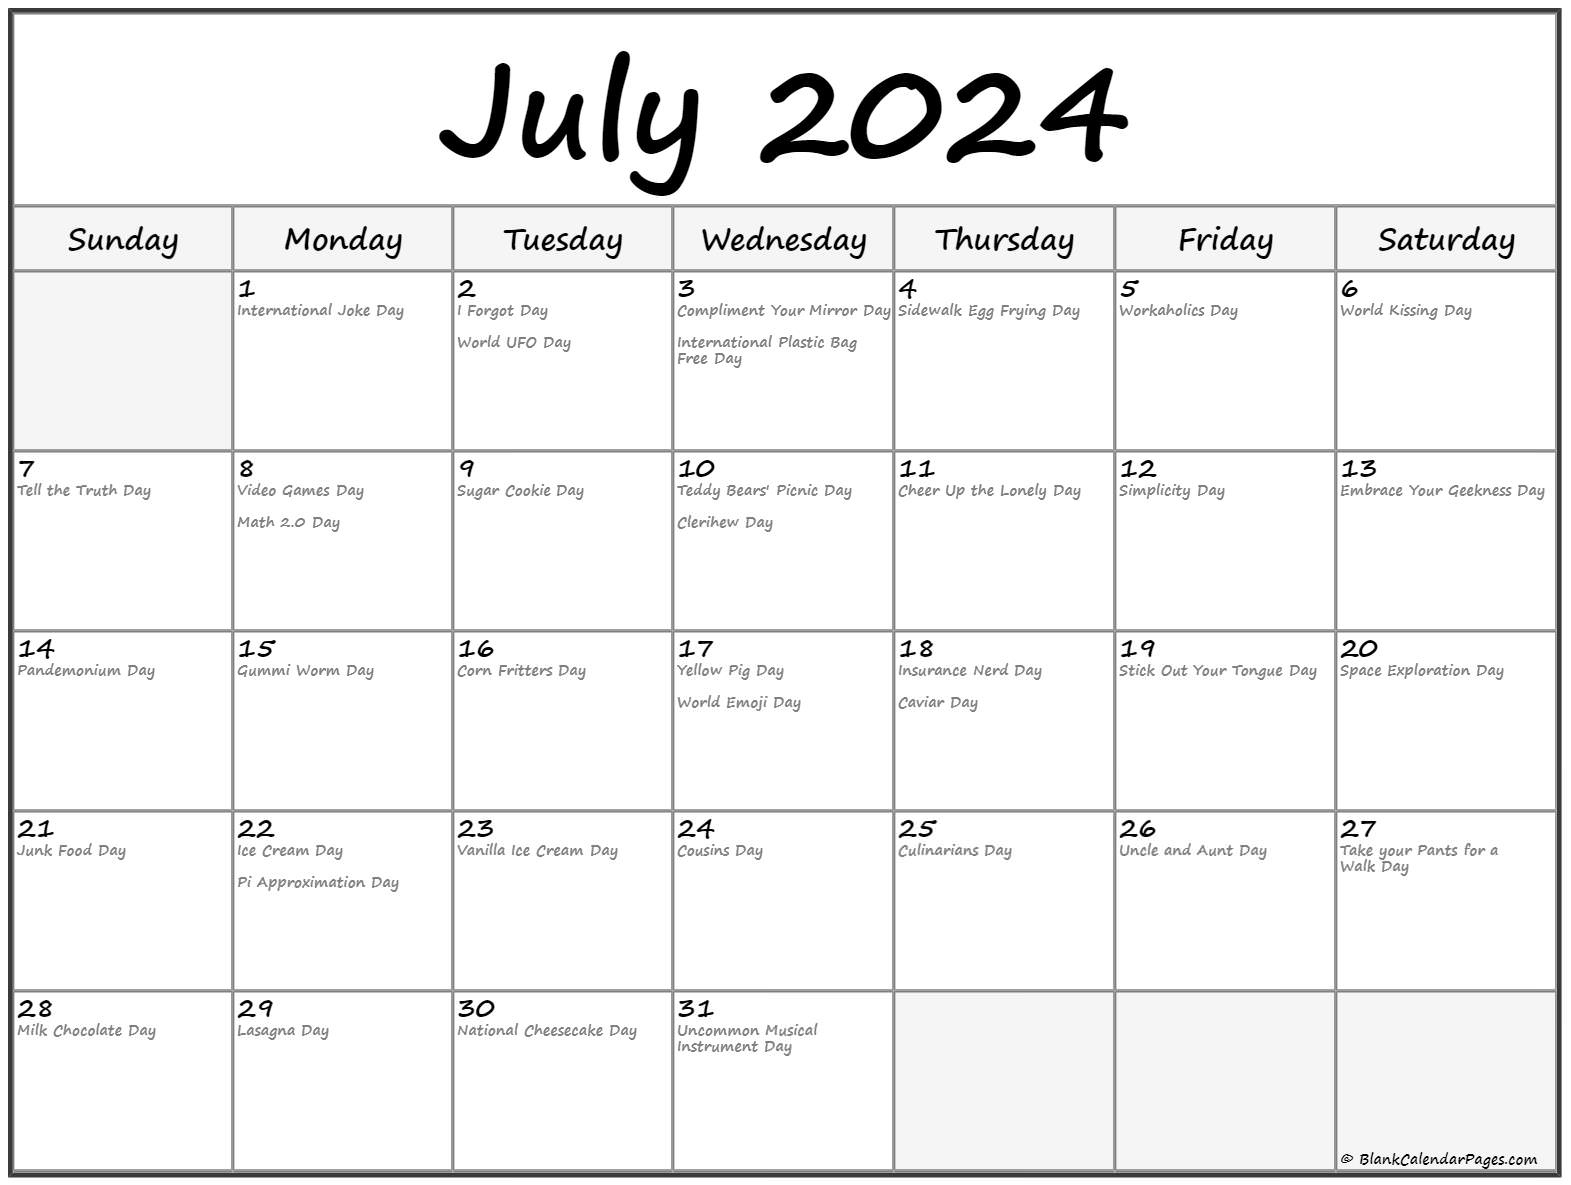 July 2024 With Holidays Calendar | National Day Calendar July 2024